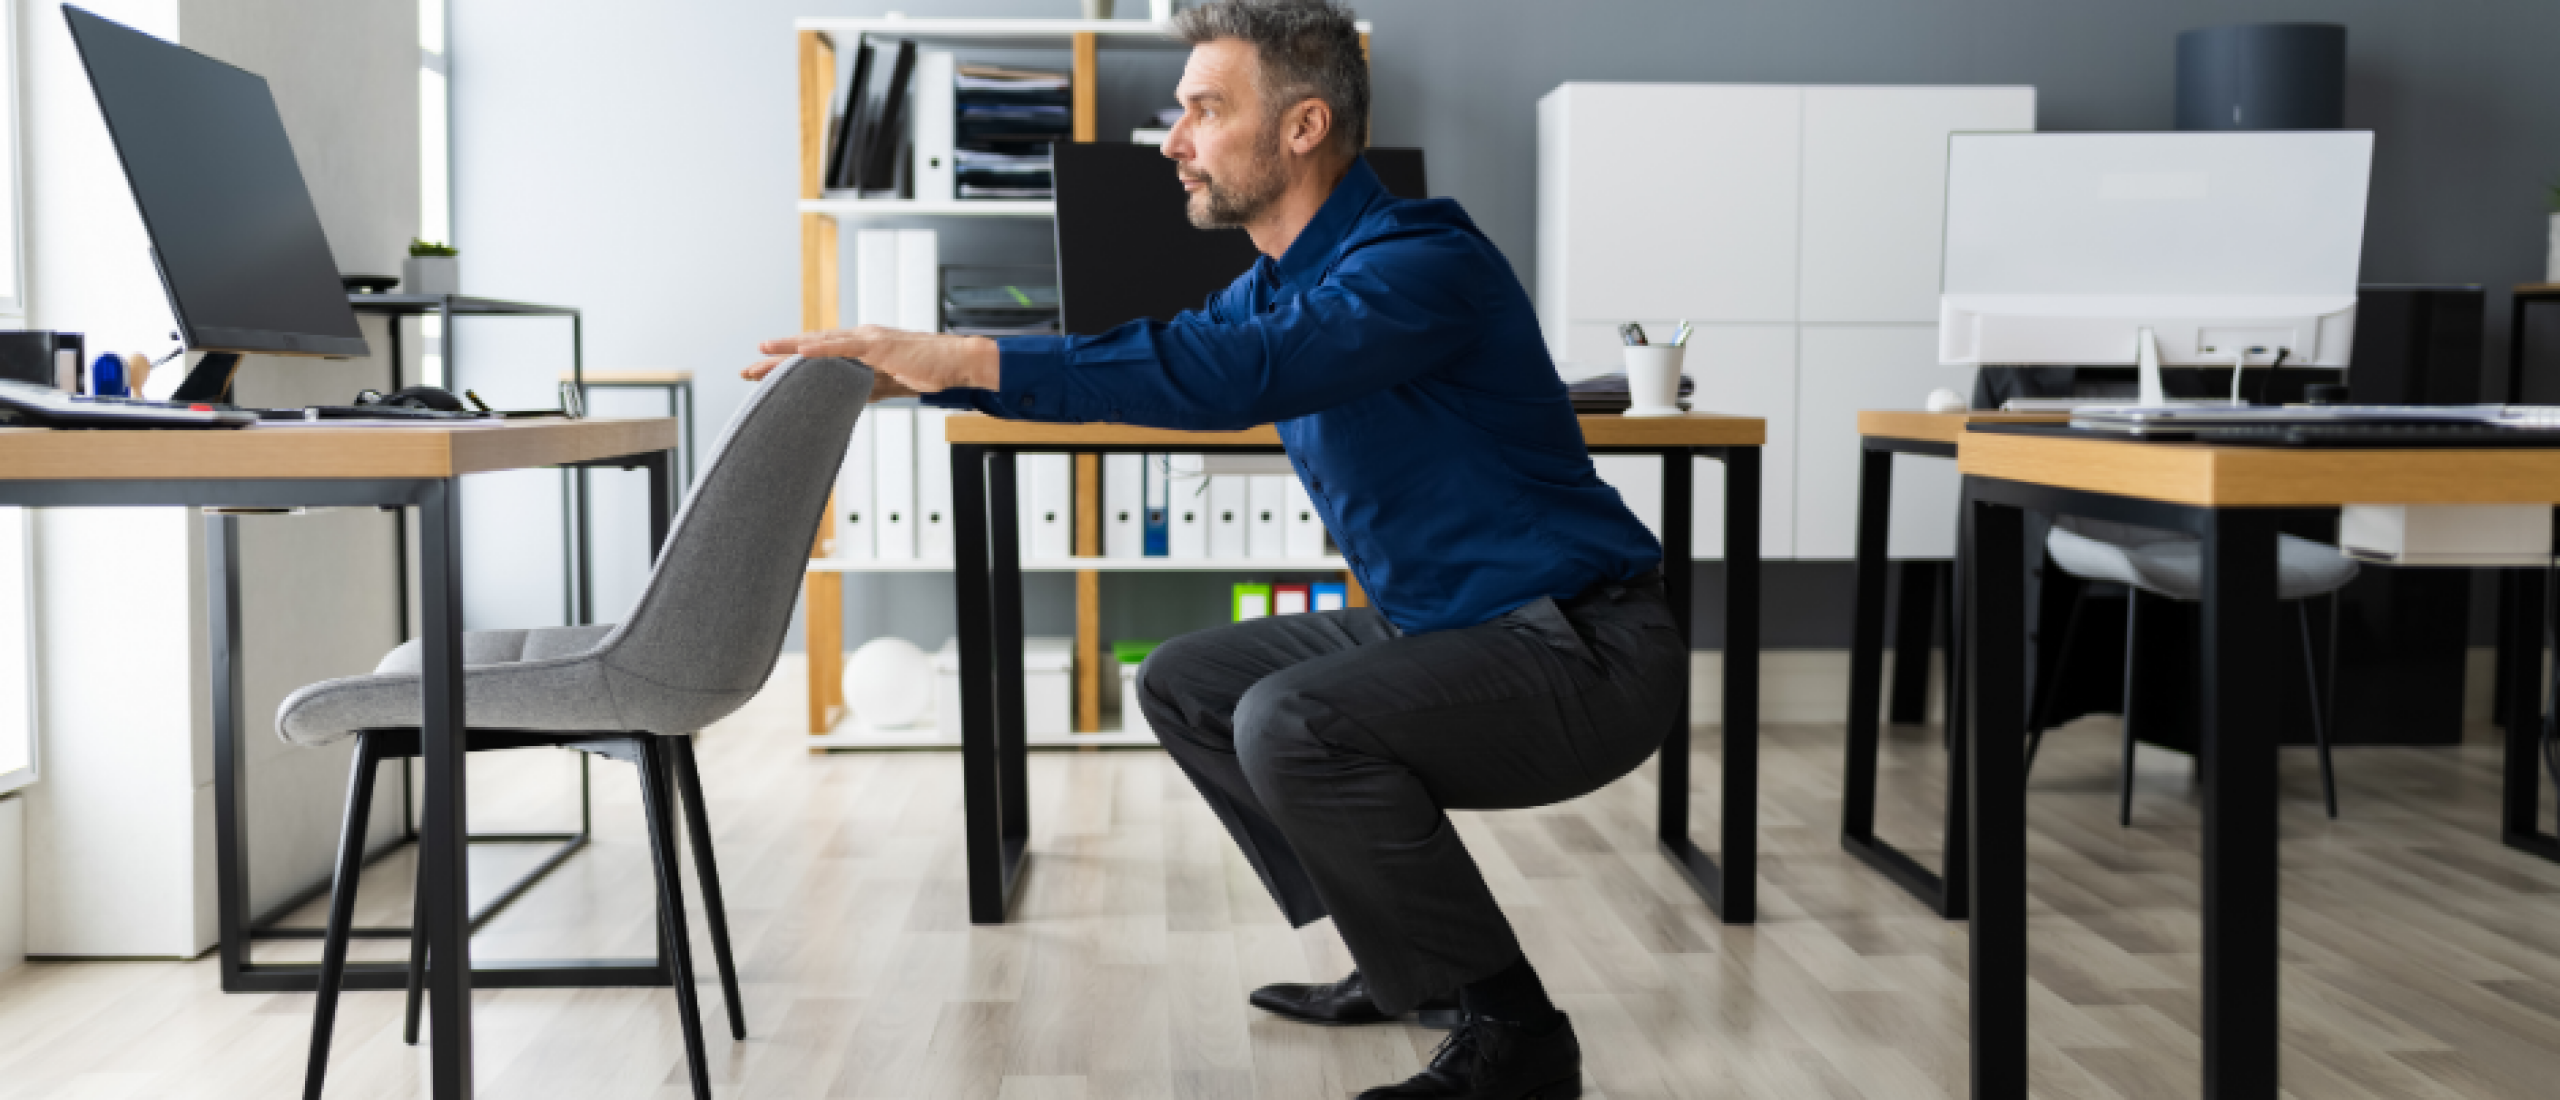 Breng medewerkers in beweging – stimuleer bewegen op kantoor